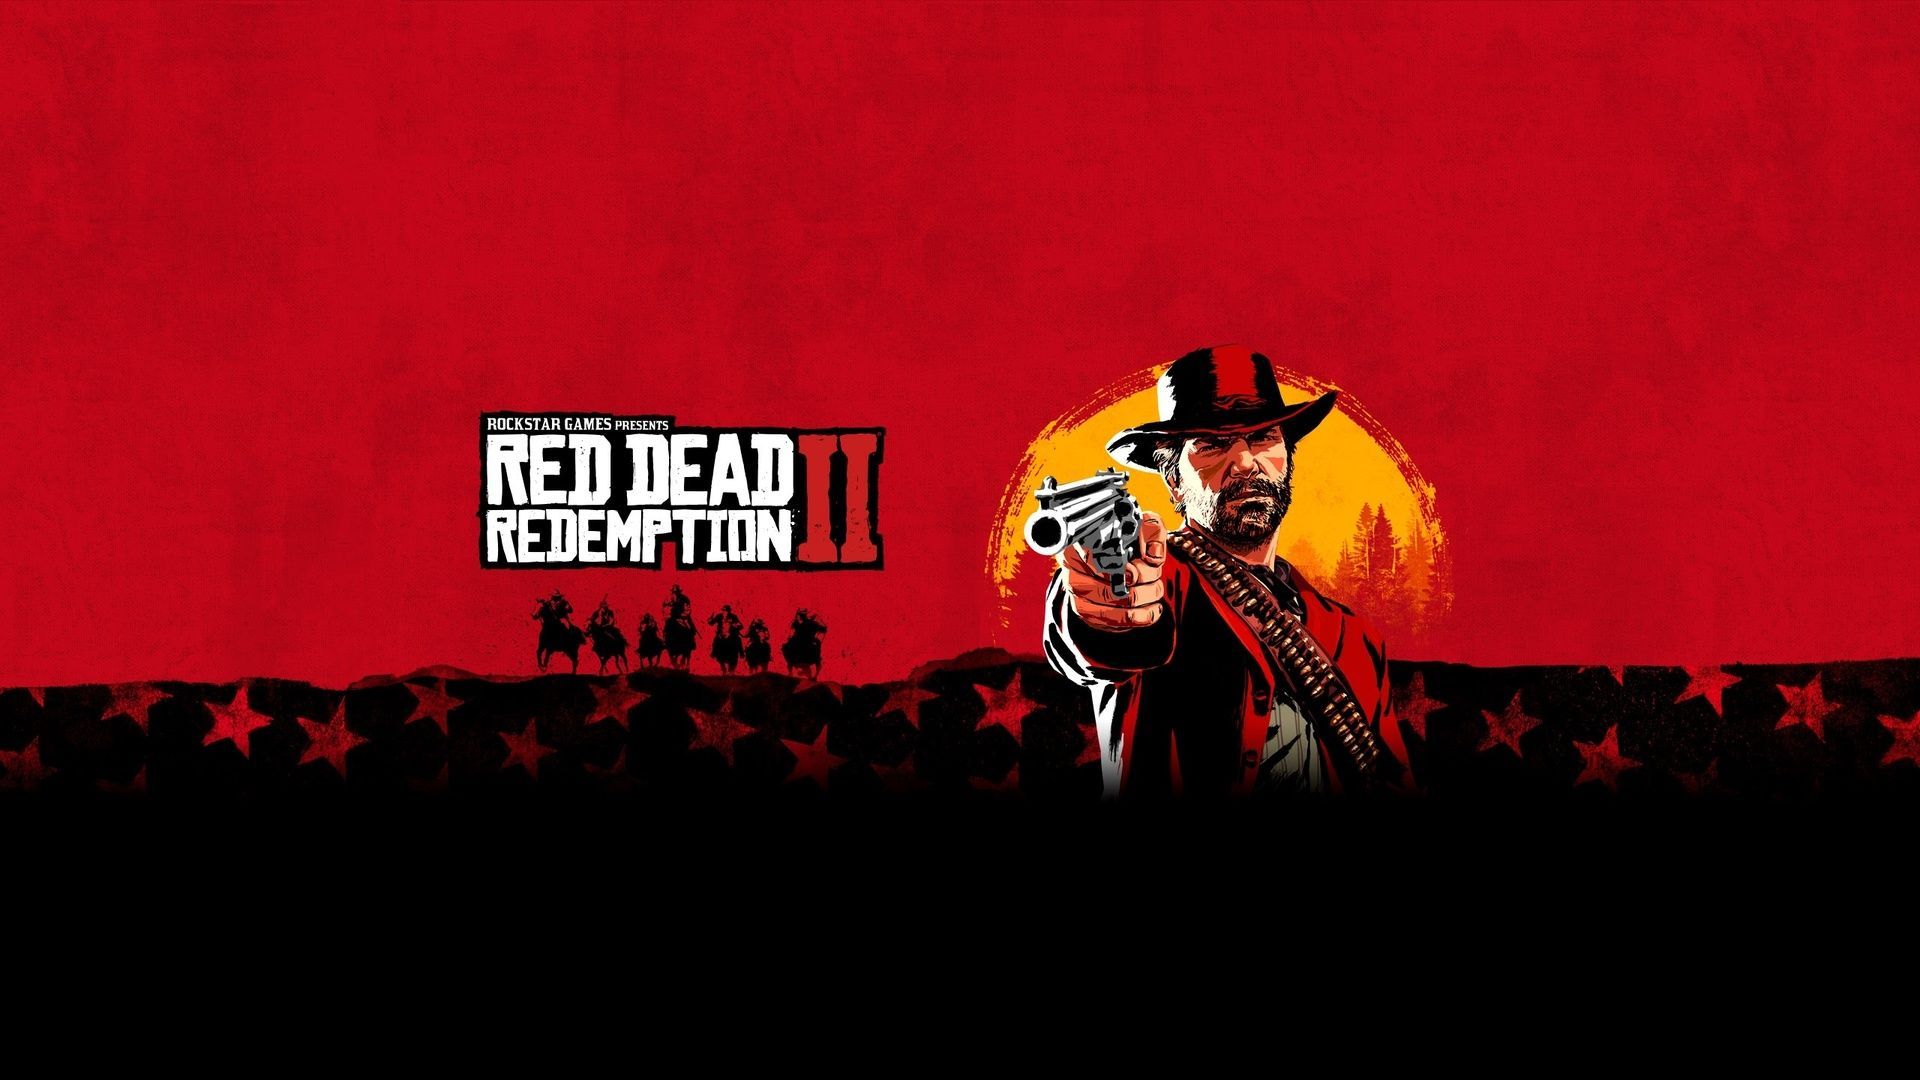 Red Dead Redemption 2 Ps4 Wallpaper .com